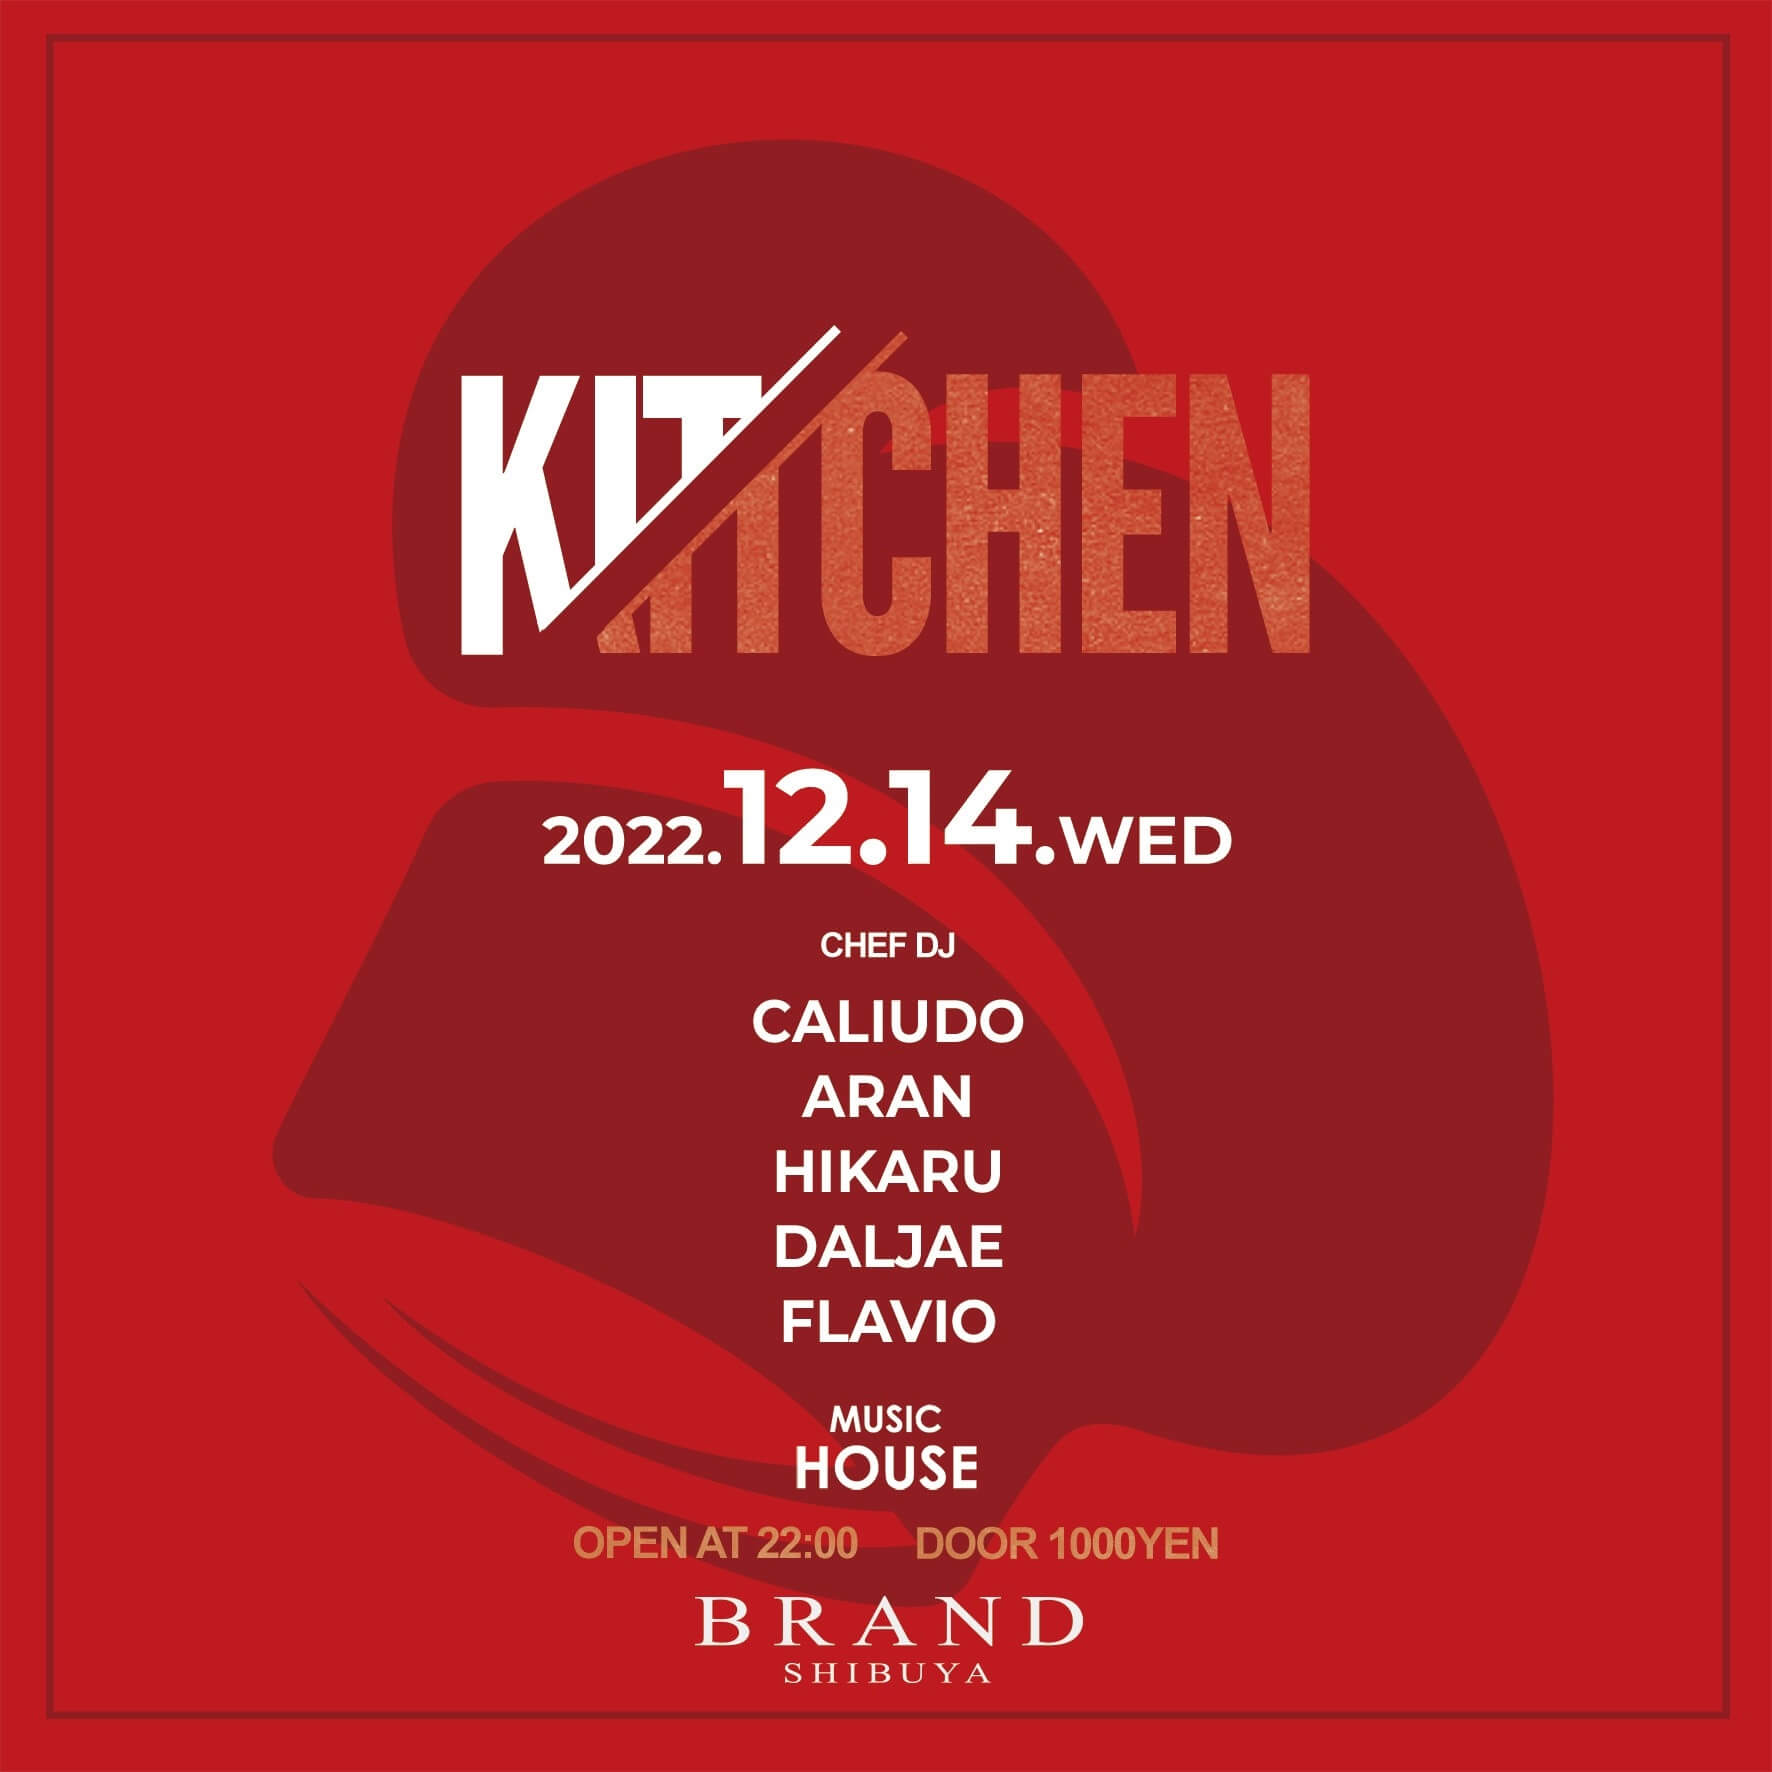 KITCHEN 2022年12月14日（水曜日）に渋谷 クラブのBRAND SHIBUYAで開催されるHOUSEイベント